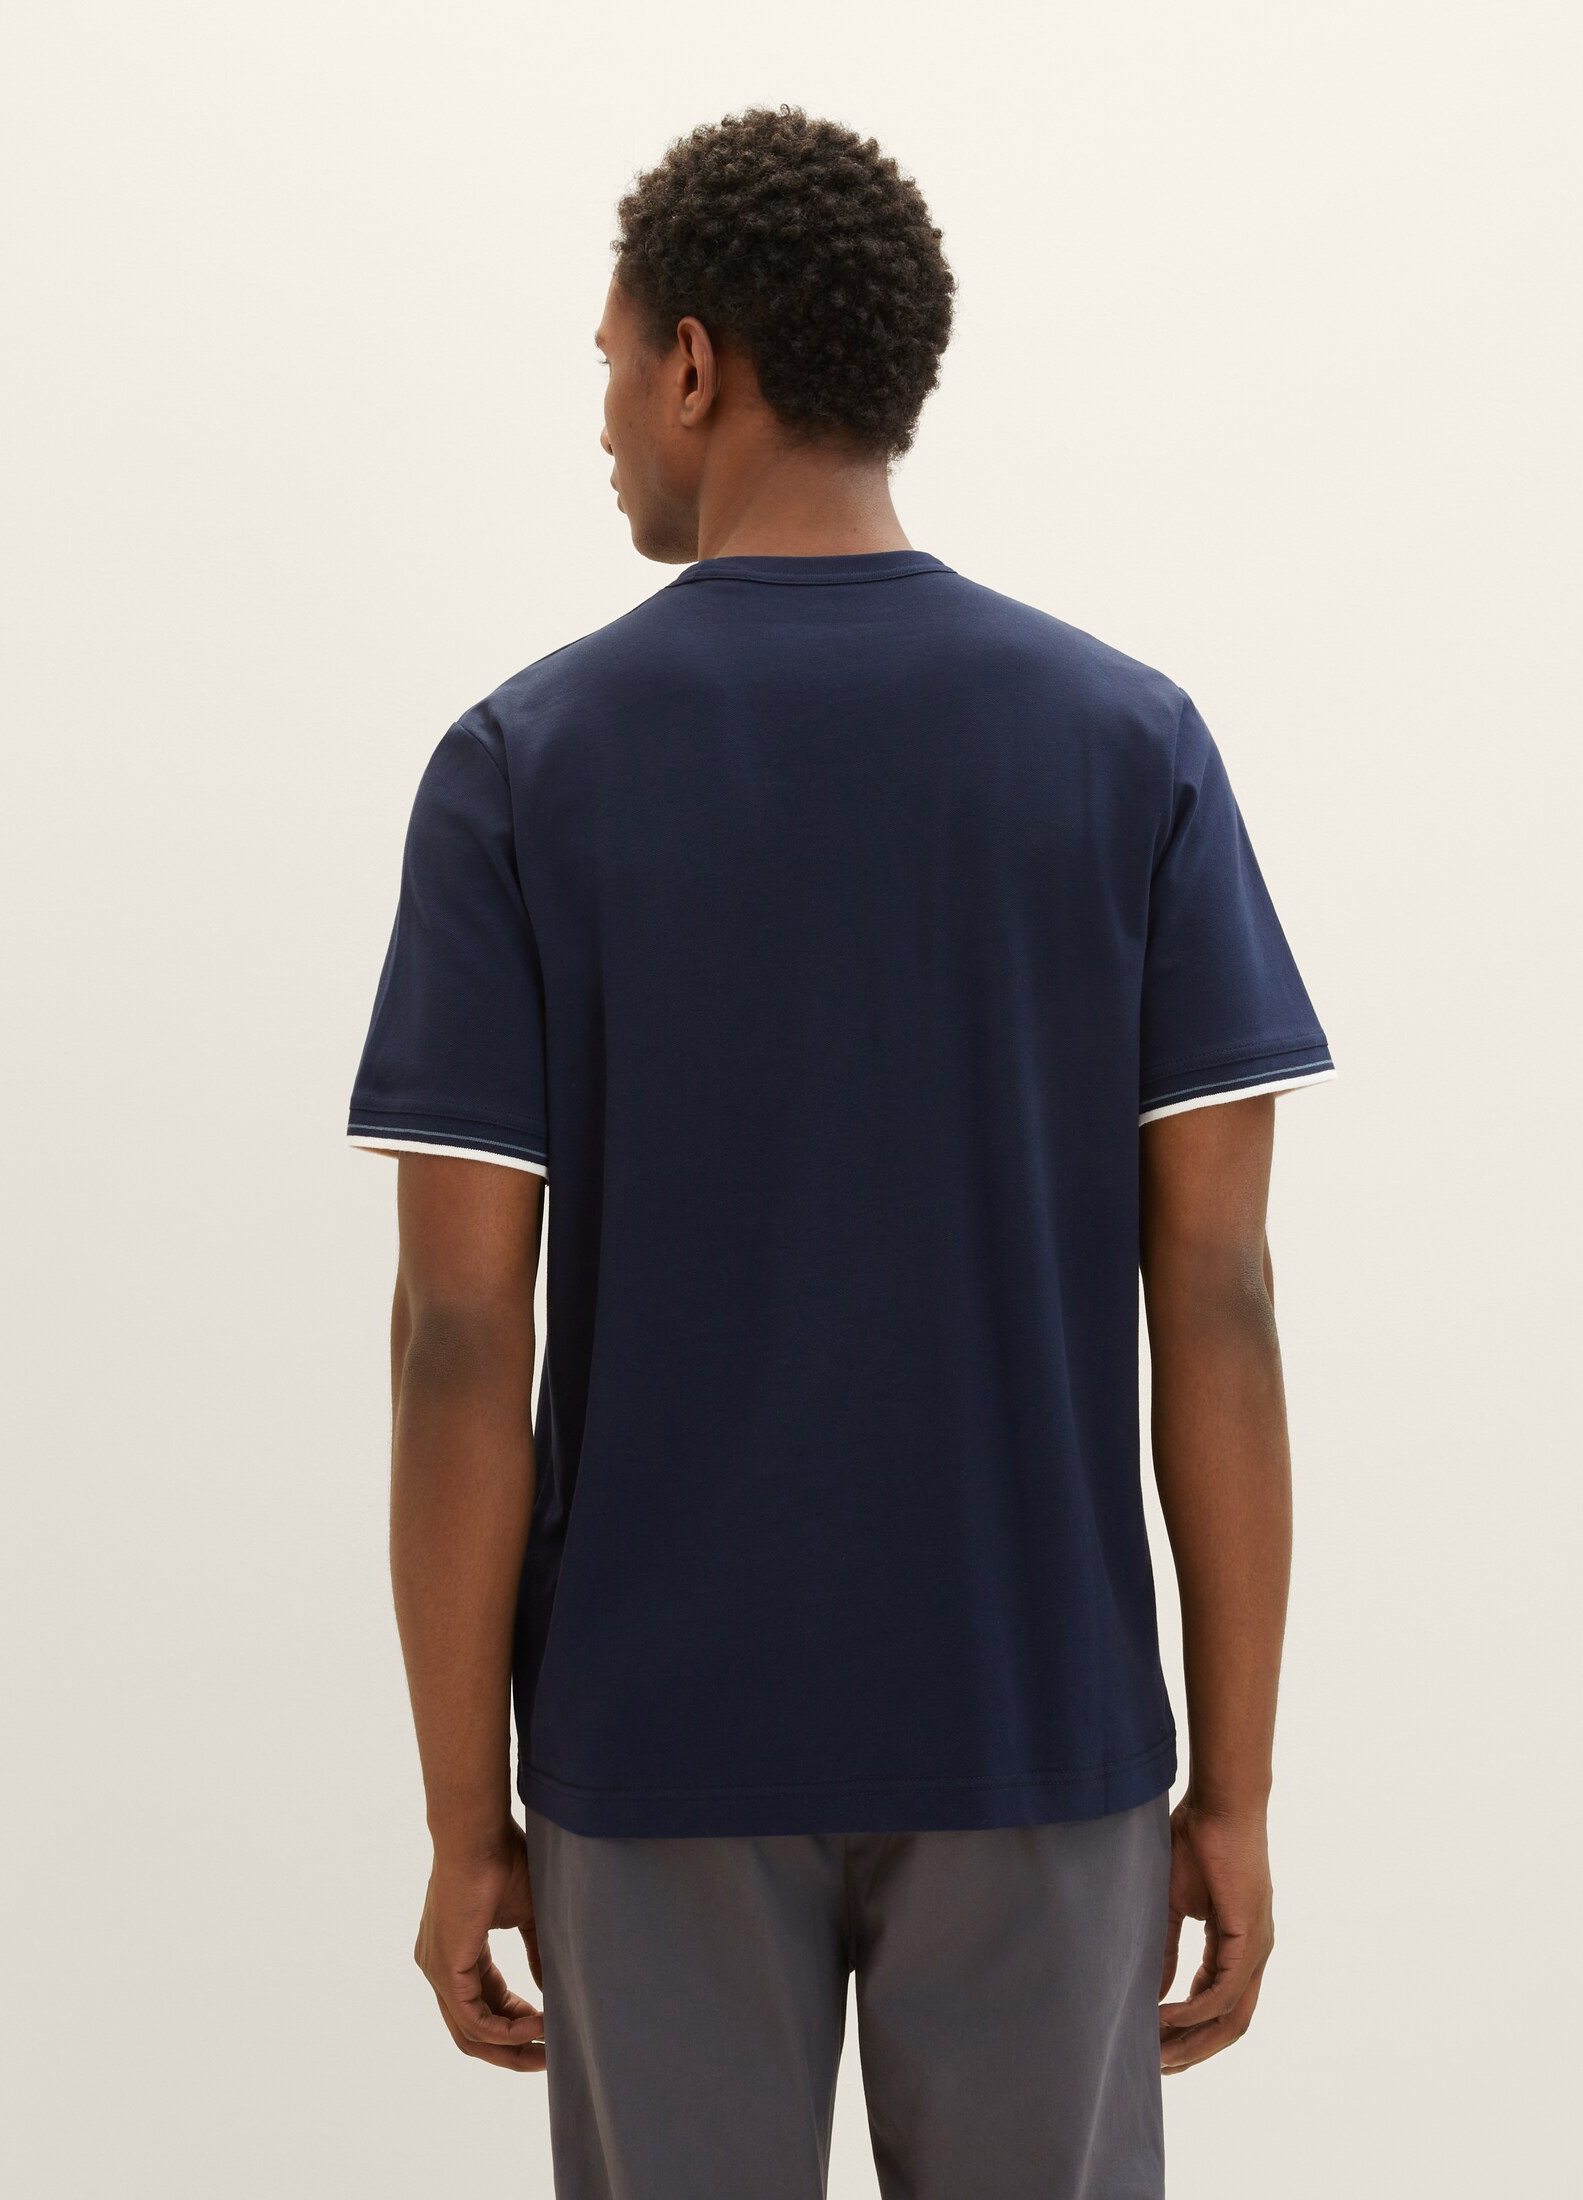 Tom Tailor T-shirt With A Print - Sky Captain Blue 14899308833